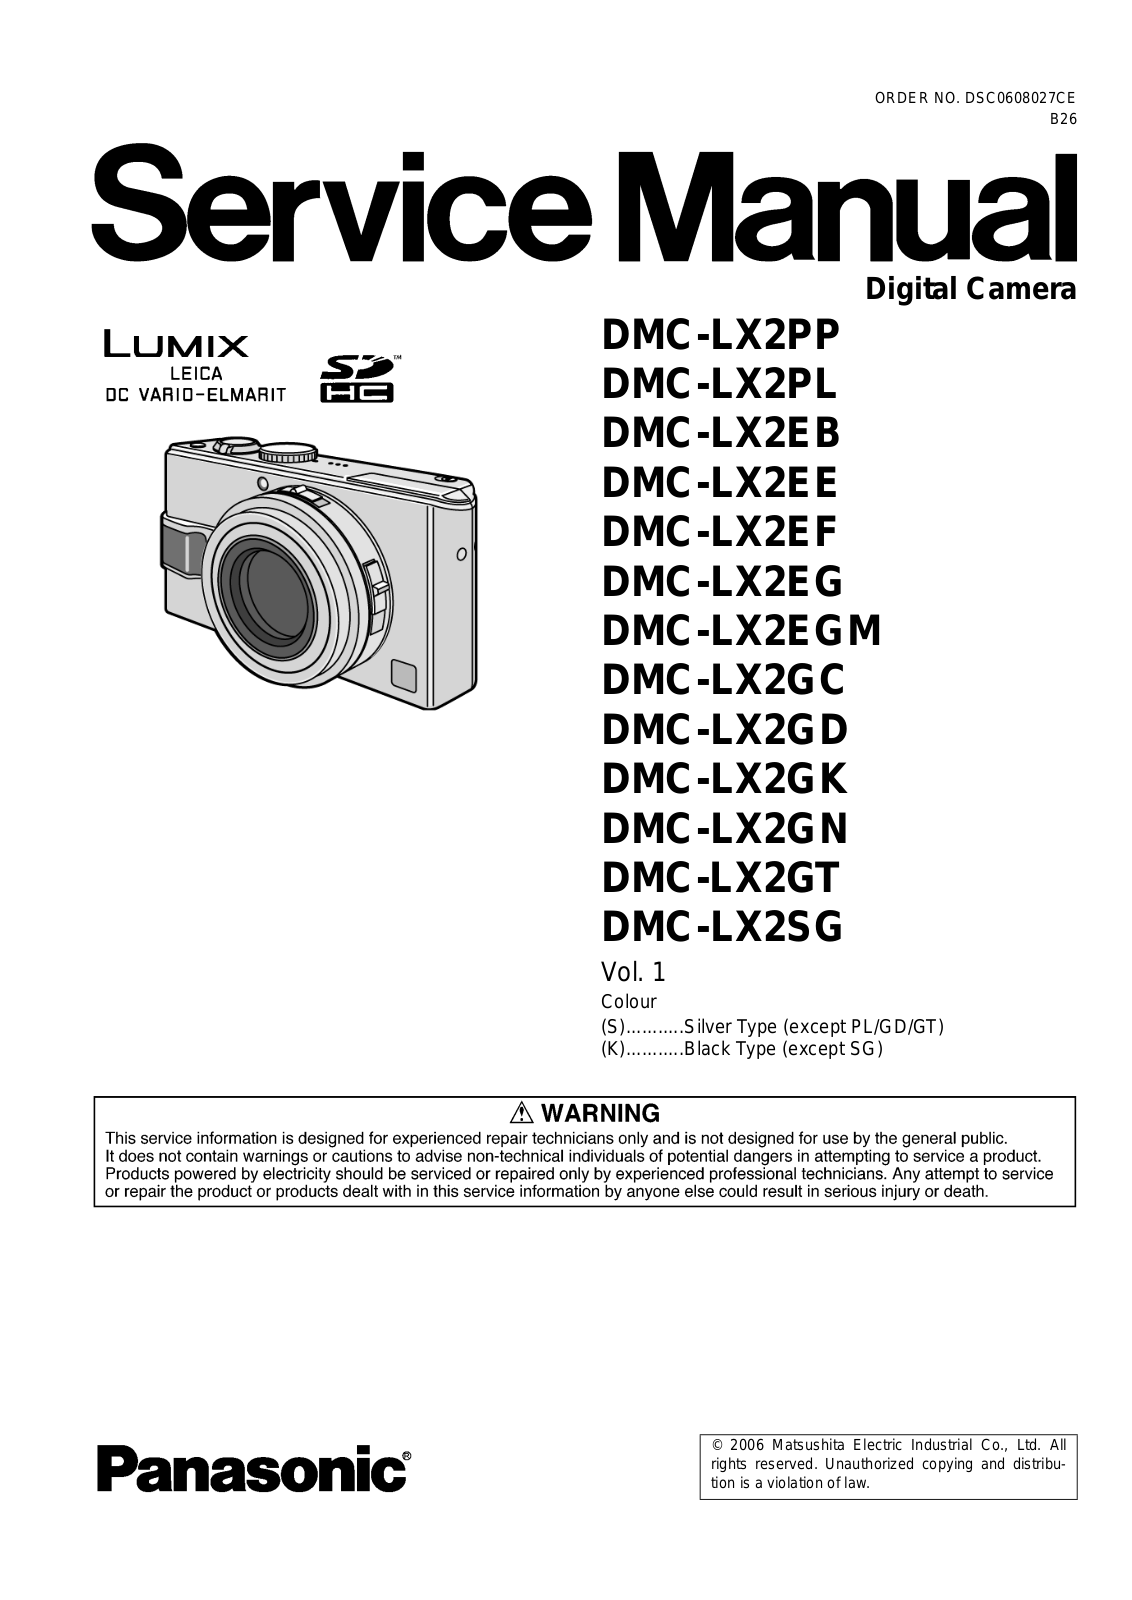 Panasonic LUMIX DMC-LX2GT, LUMIX DMC-LX2GC, LUMIX DMC-LX2EF, LUMIX DMC-LX2PP, LUMIX DMC-LX2GK Service Manual